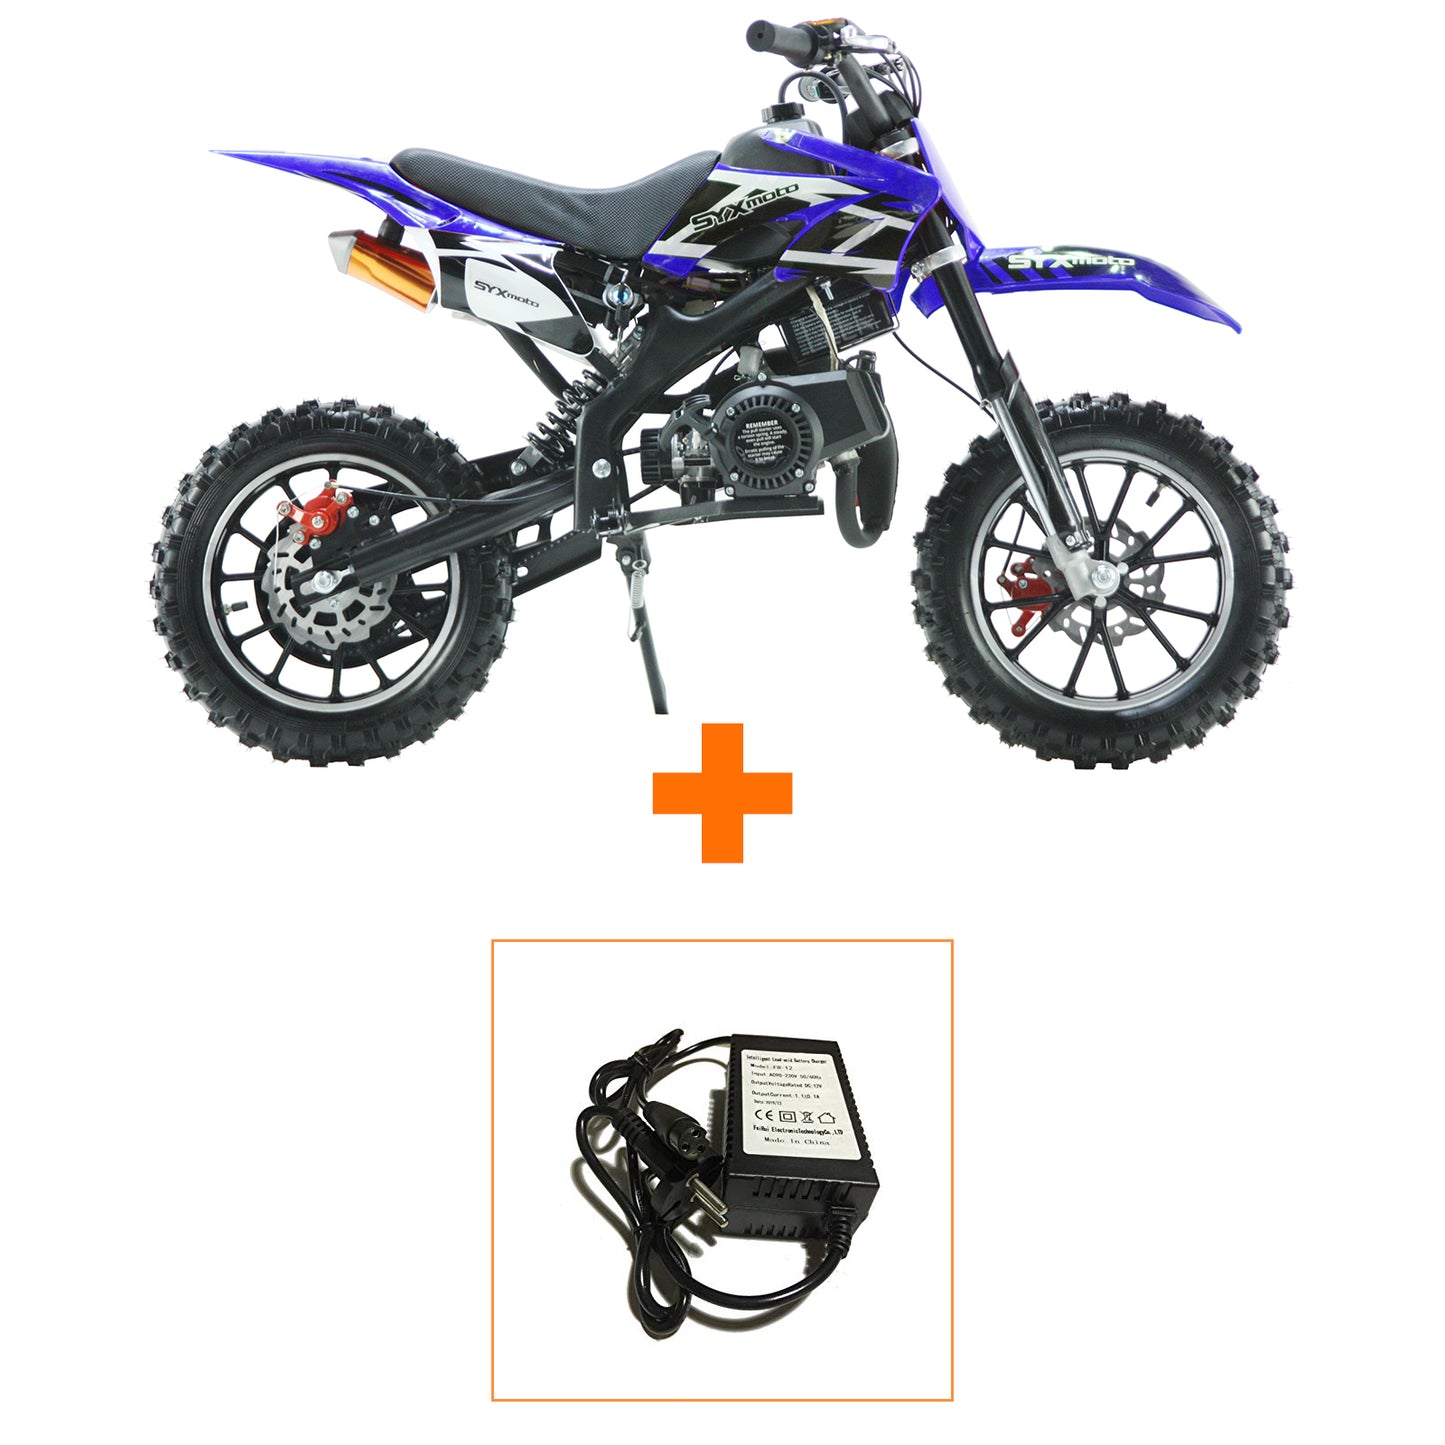 SYX MOTO Holeshot ES 50cc Electric Start/Pull Start Mini Dirt Bike, Blue - SYX MOTO